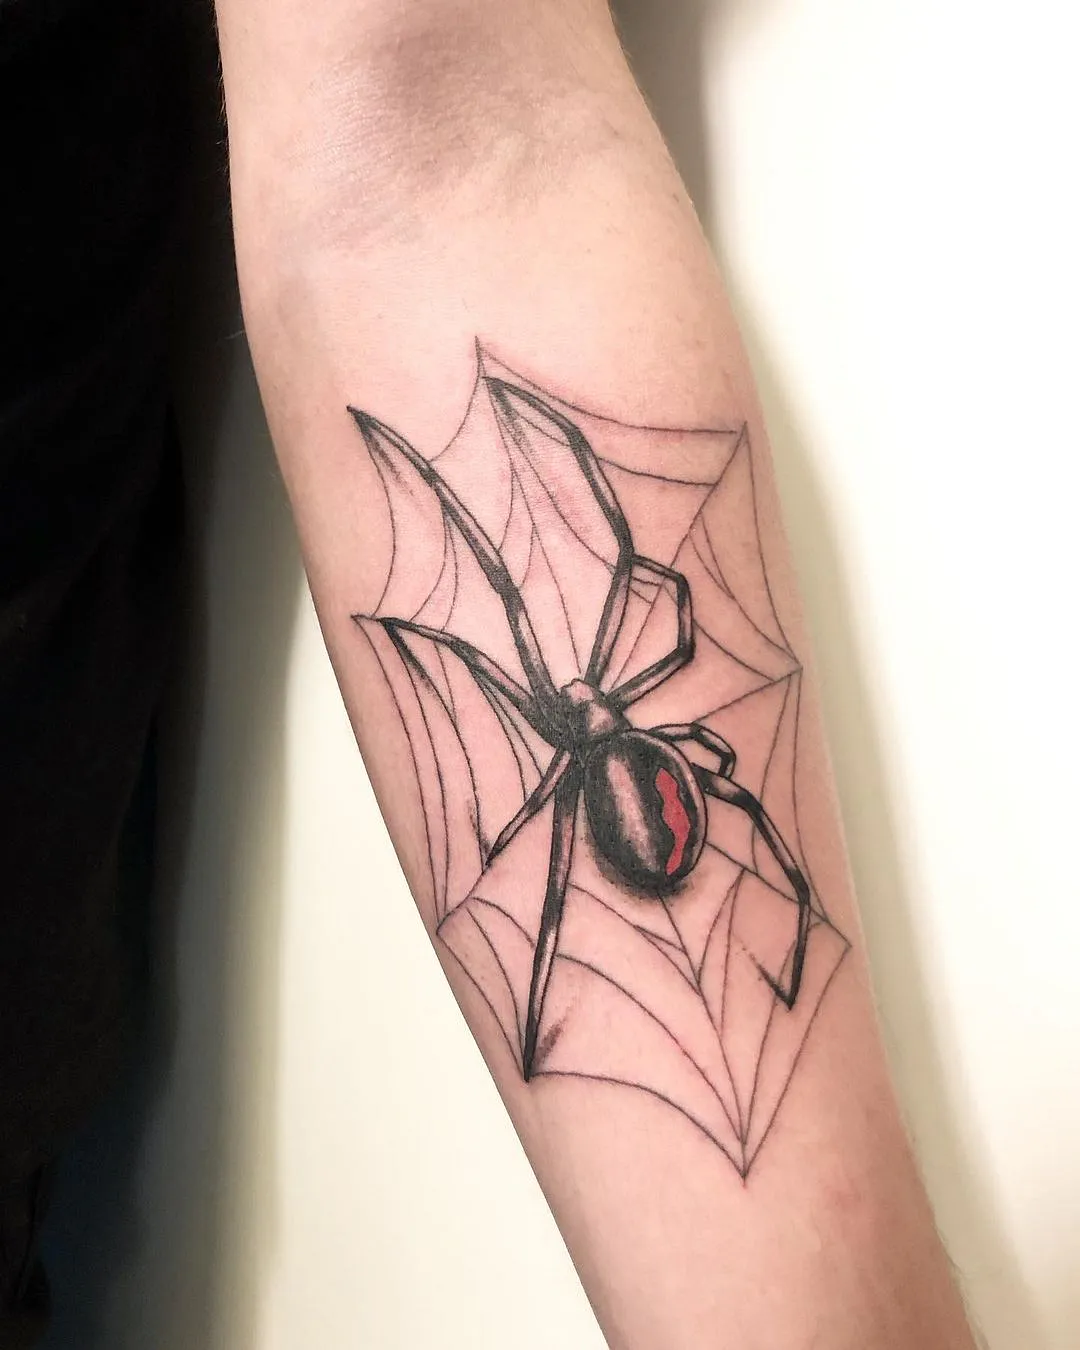 Black widow spider tattoo 7